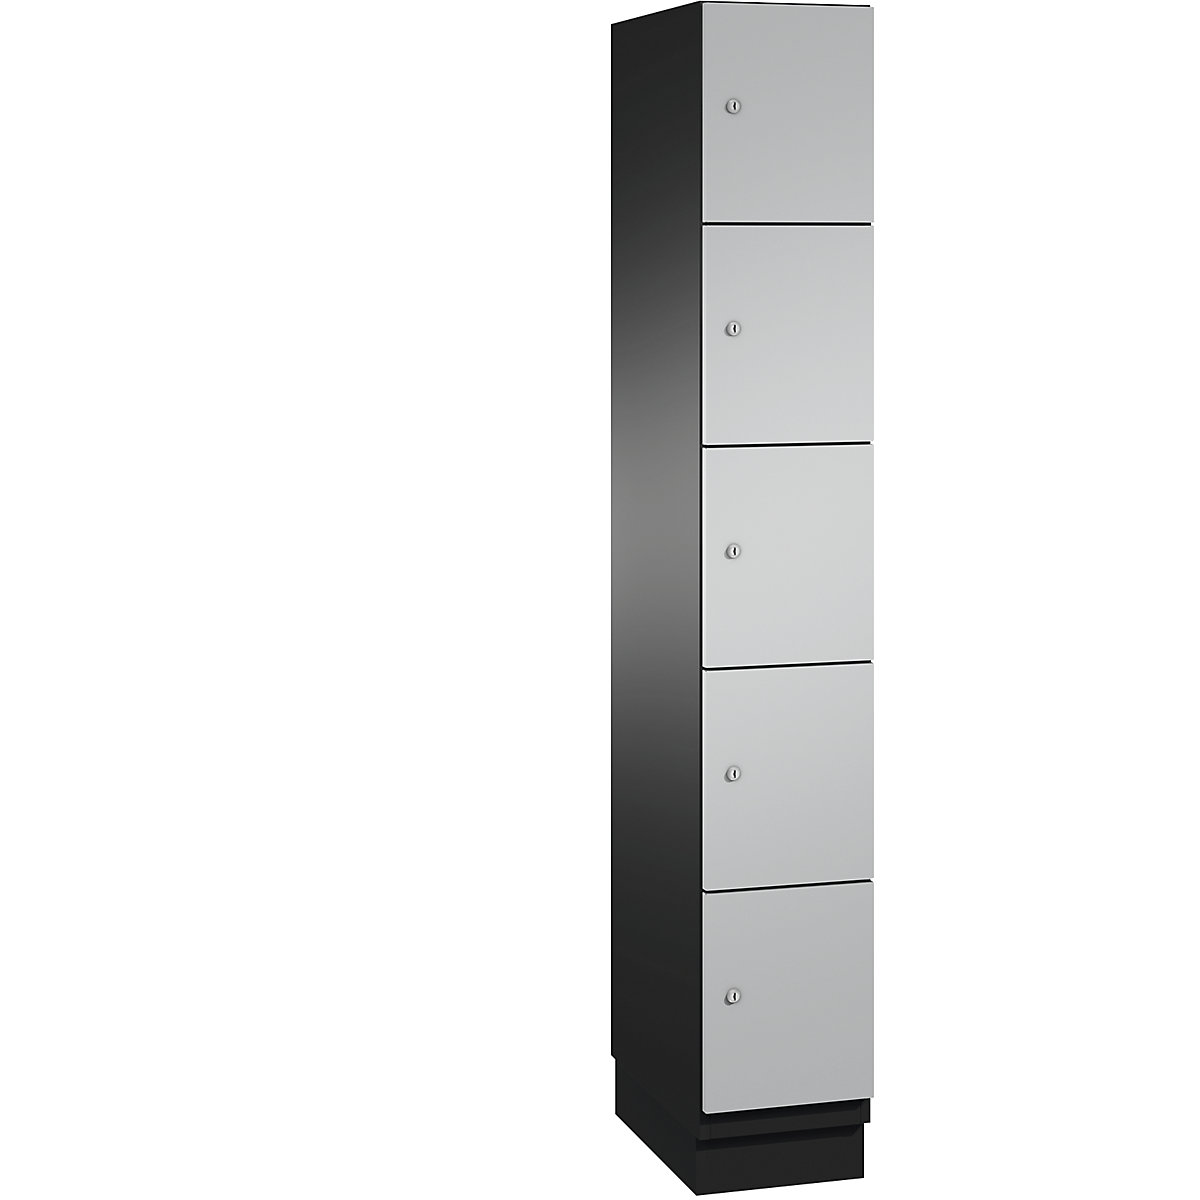 CAMBIO compartment locker with sheet steel doors – C+P